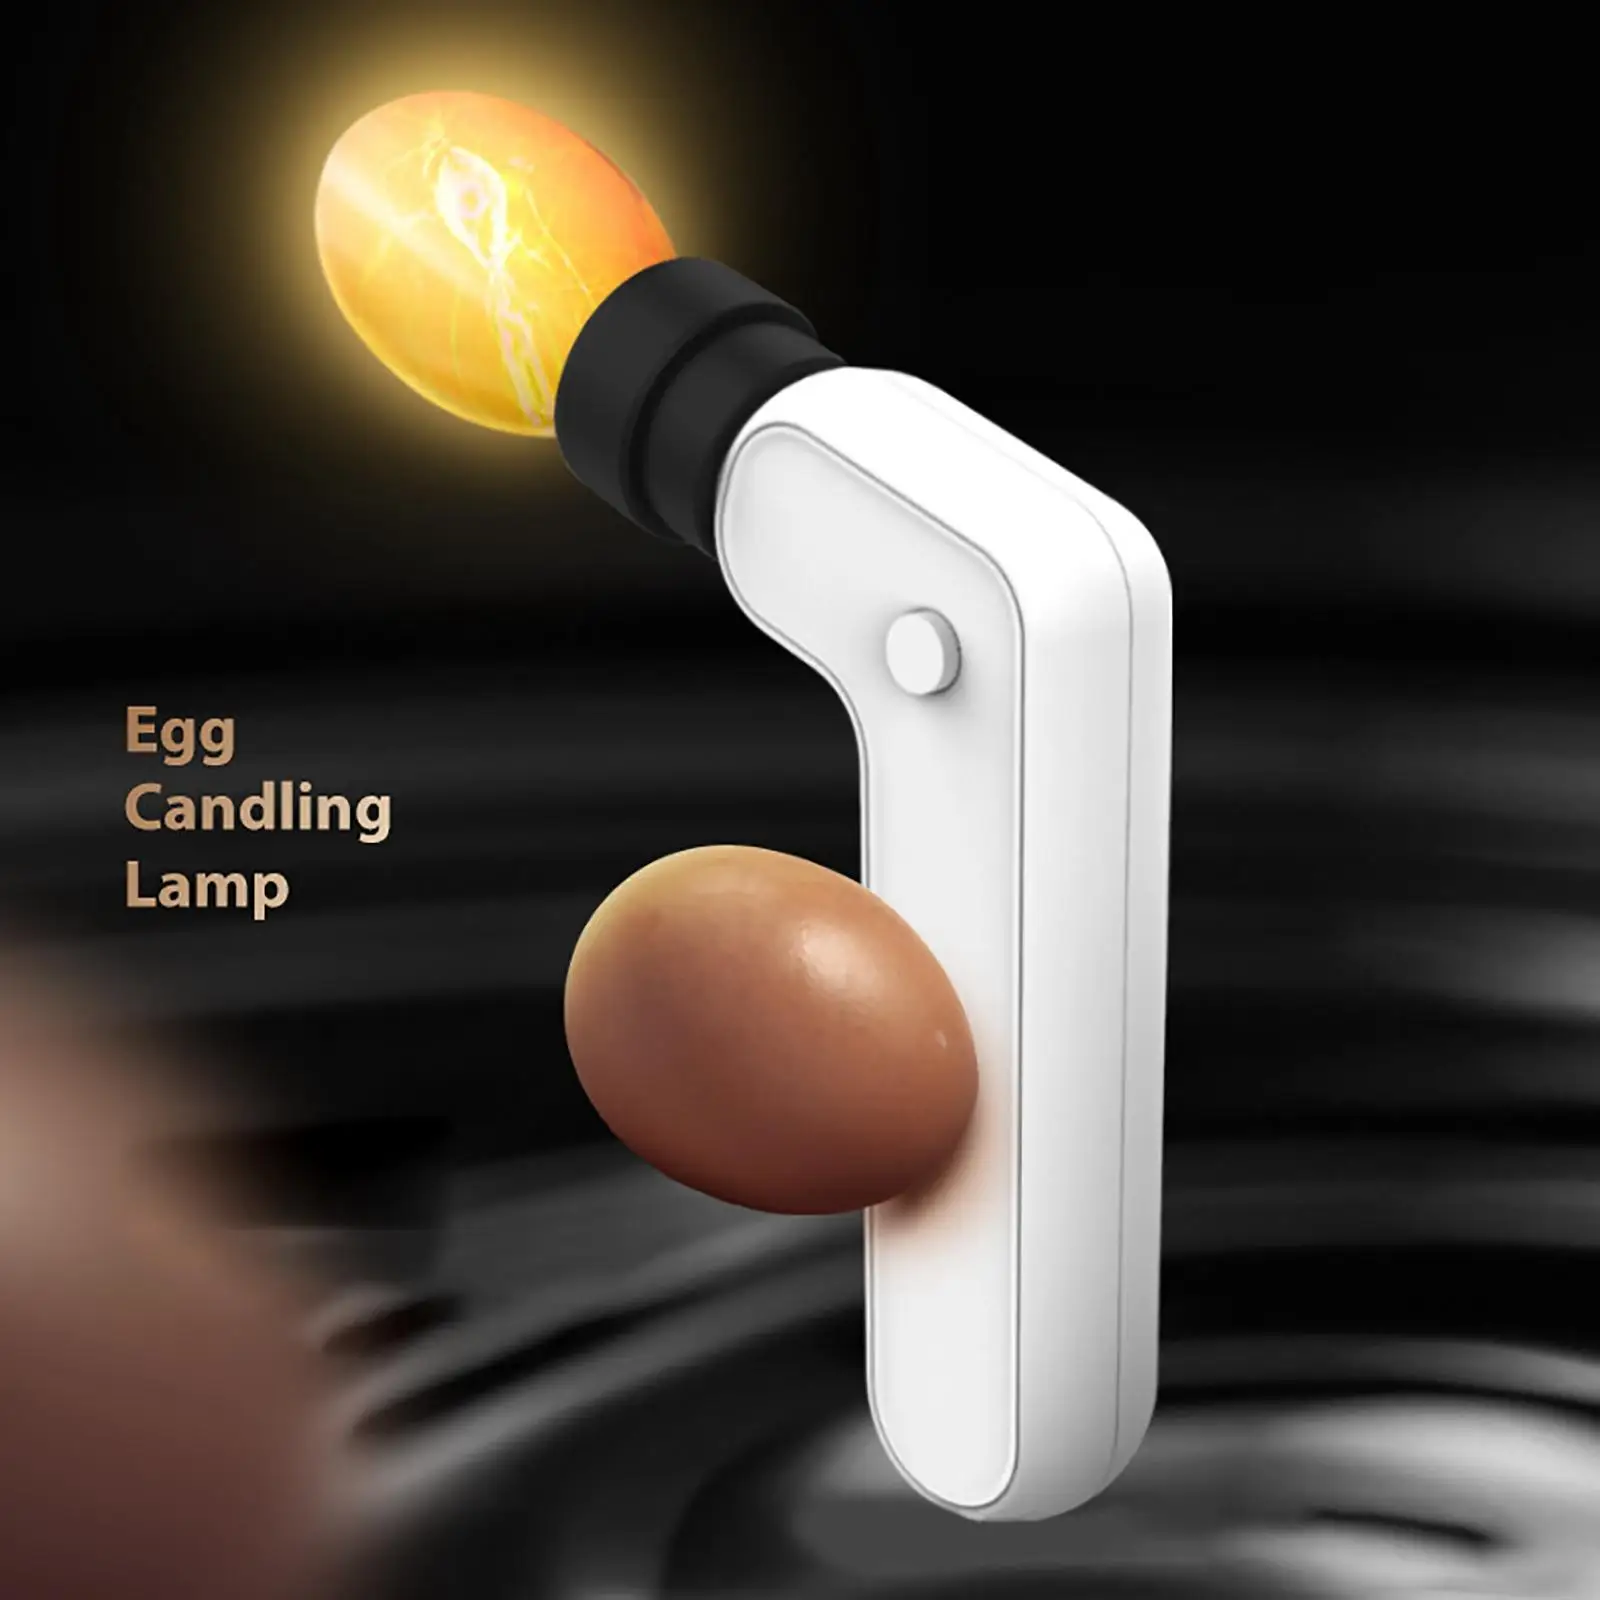 Cool LED Light Egg Candler Tester Candling Lamp for Chickens Poultry Ducks